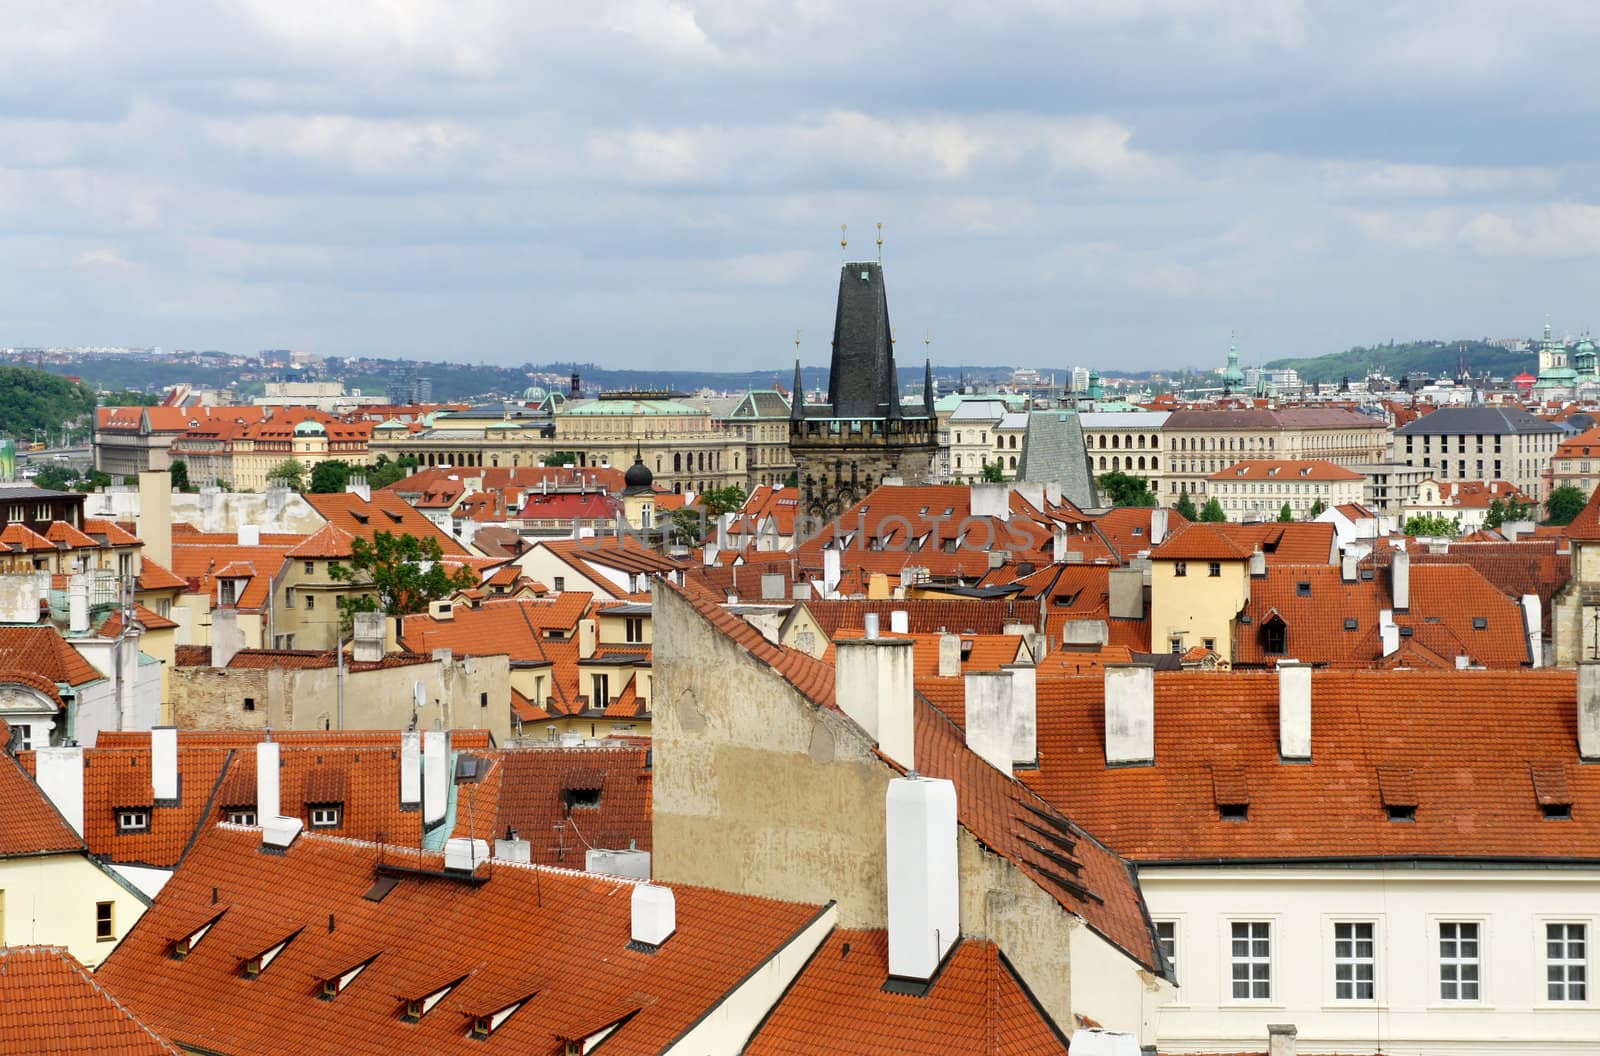 Prague panorama  by tanouchka